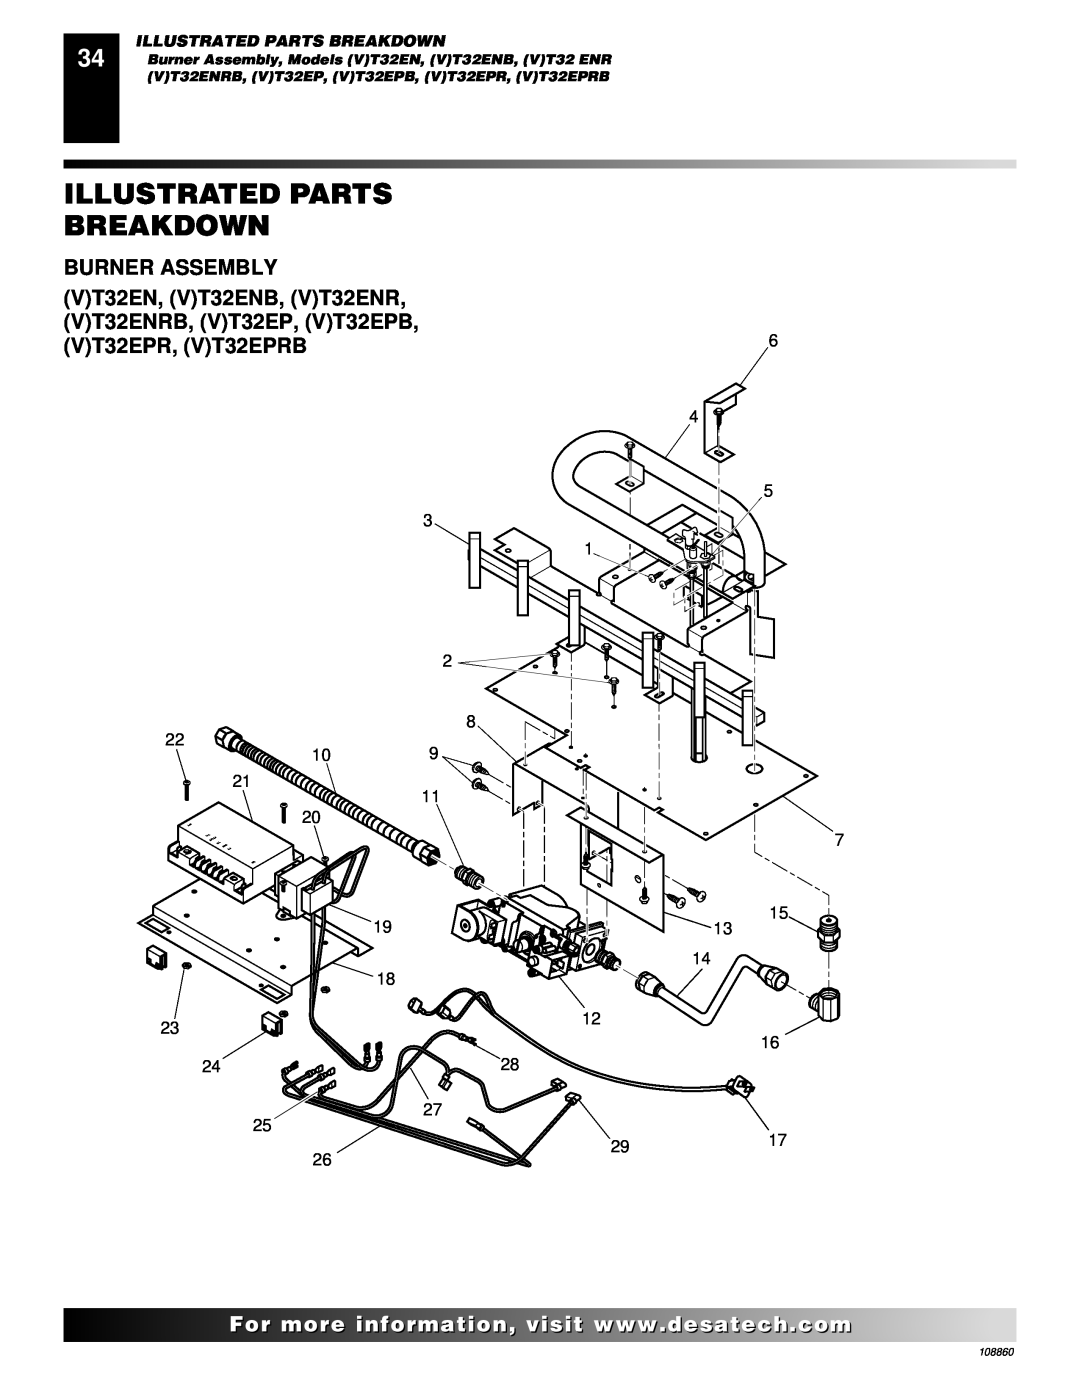 Desa (V)T36EN SERIES, (V)T32EP, (V)T36EP SERIES, V)T32EN Illustrated Parts Breakdown, Burner Assembly, 108860 